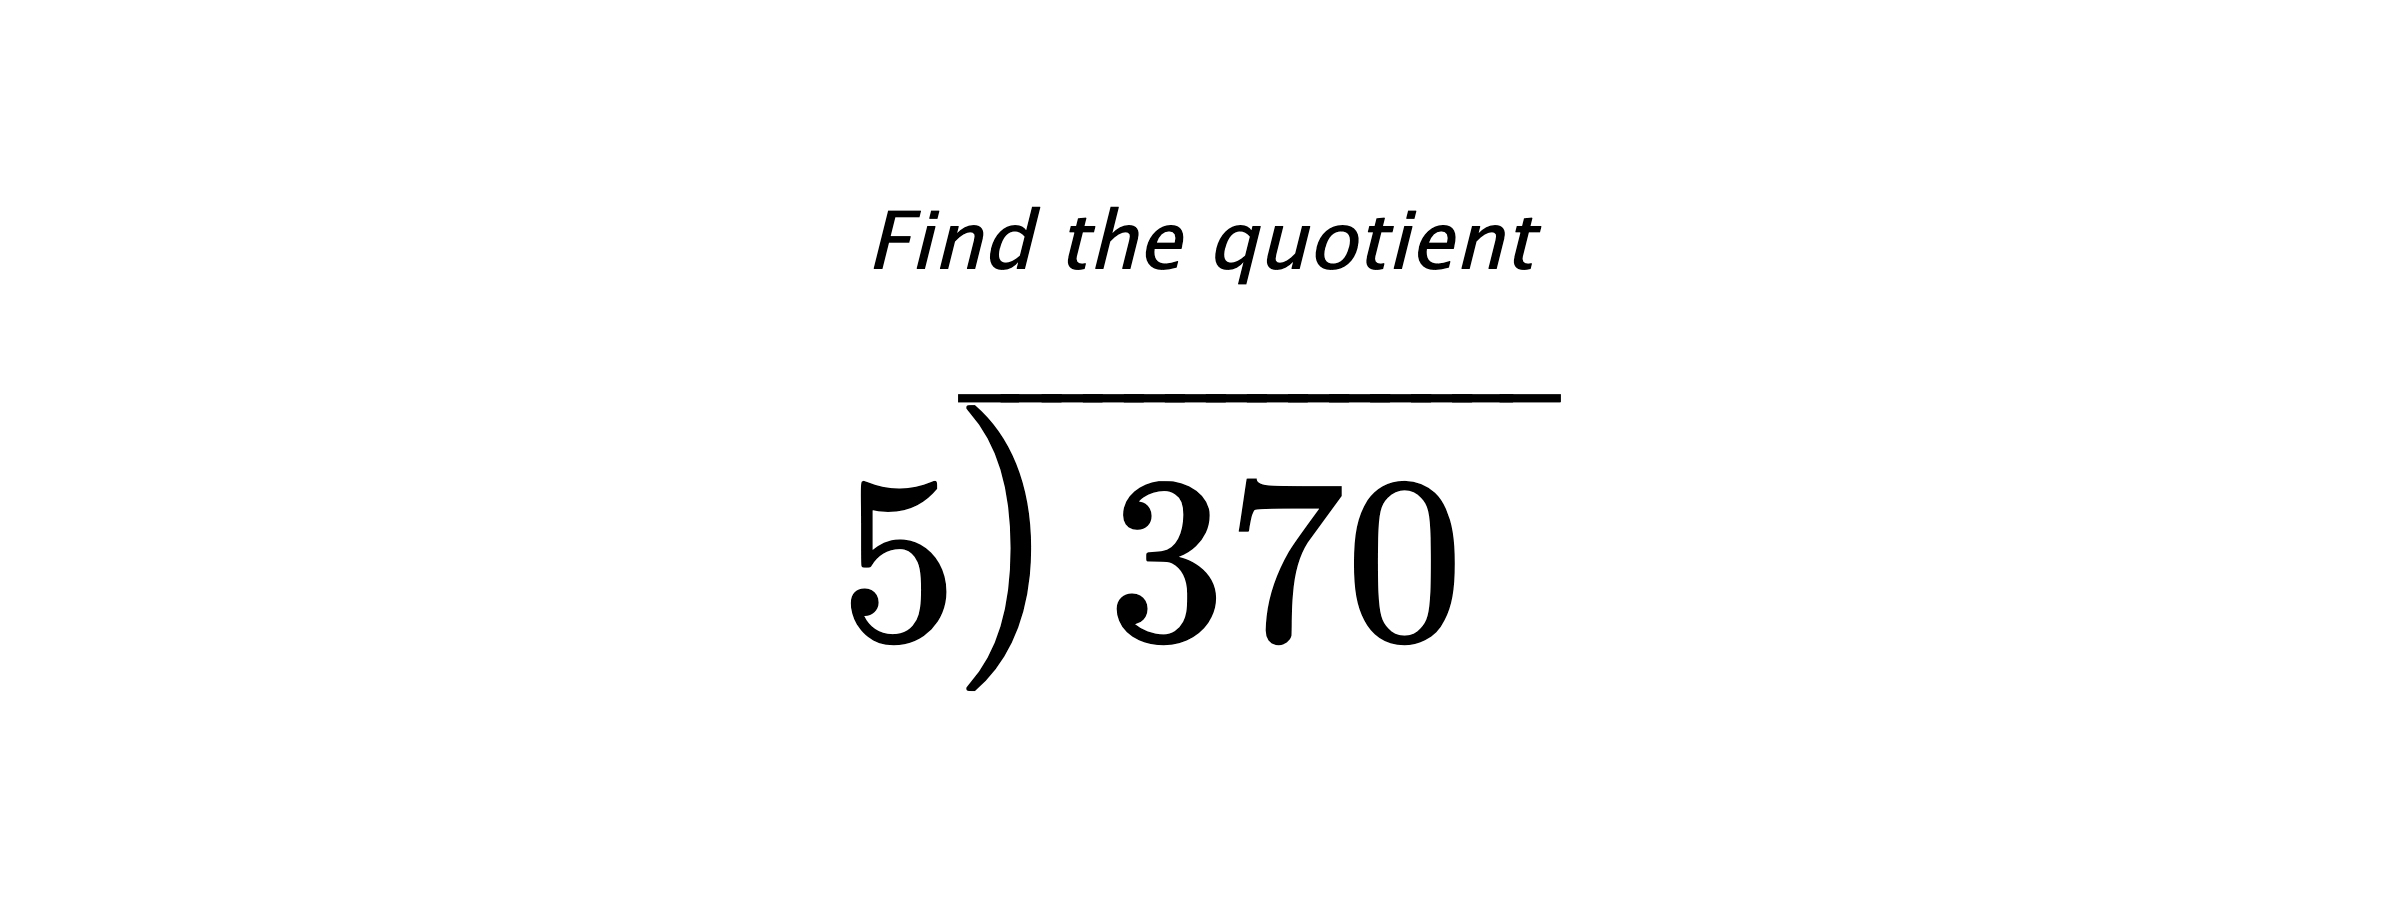 Find the quotient $ 5{\overline{\smash{\raise.3ex\hbox{$\big)$}}\,370\phantom{)}}} $